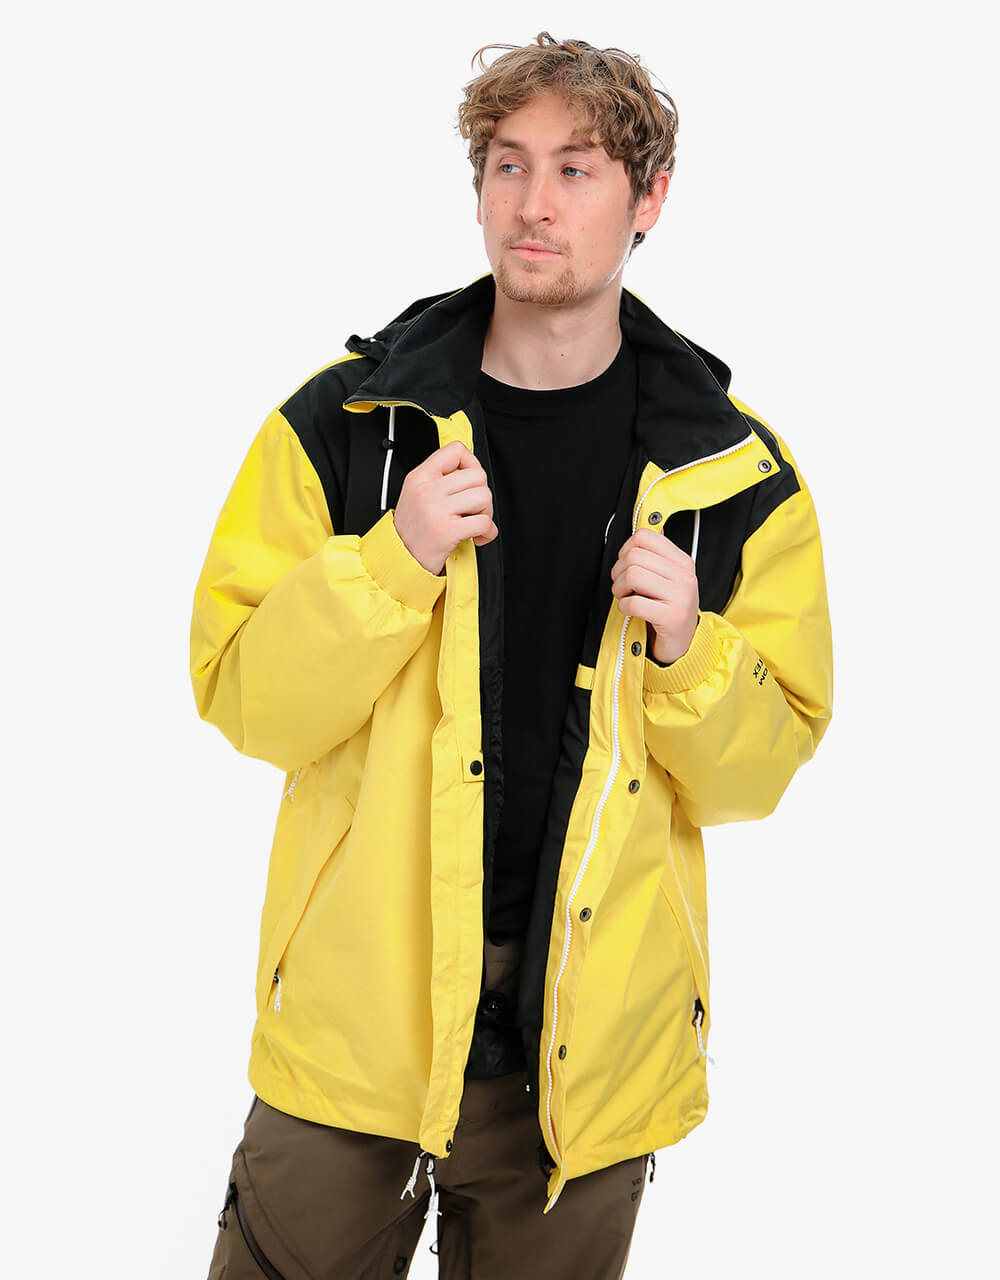 Volcom Longo GORE-TEX® Snowboard Jacket - Faded Lemon